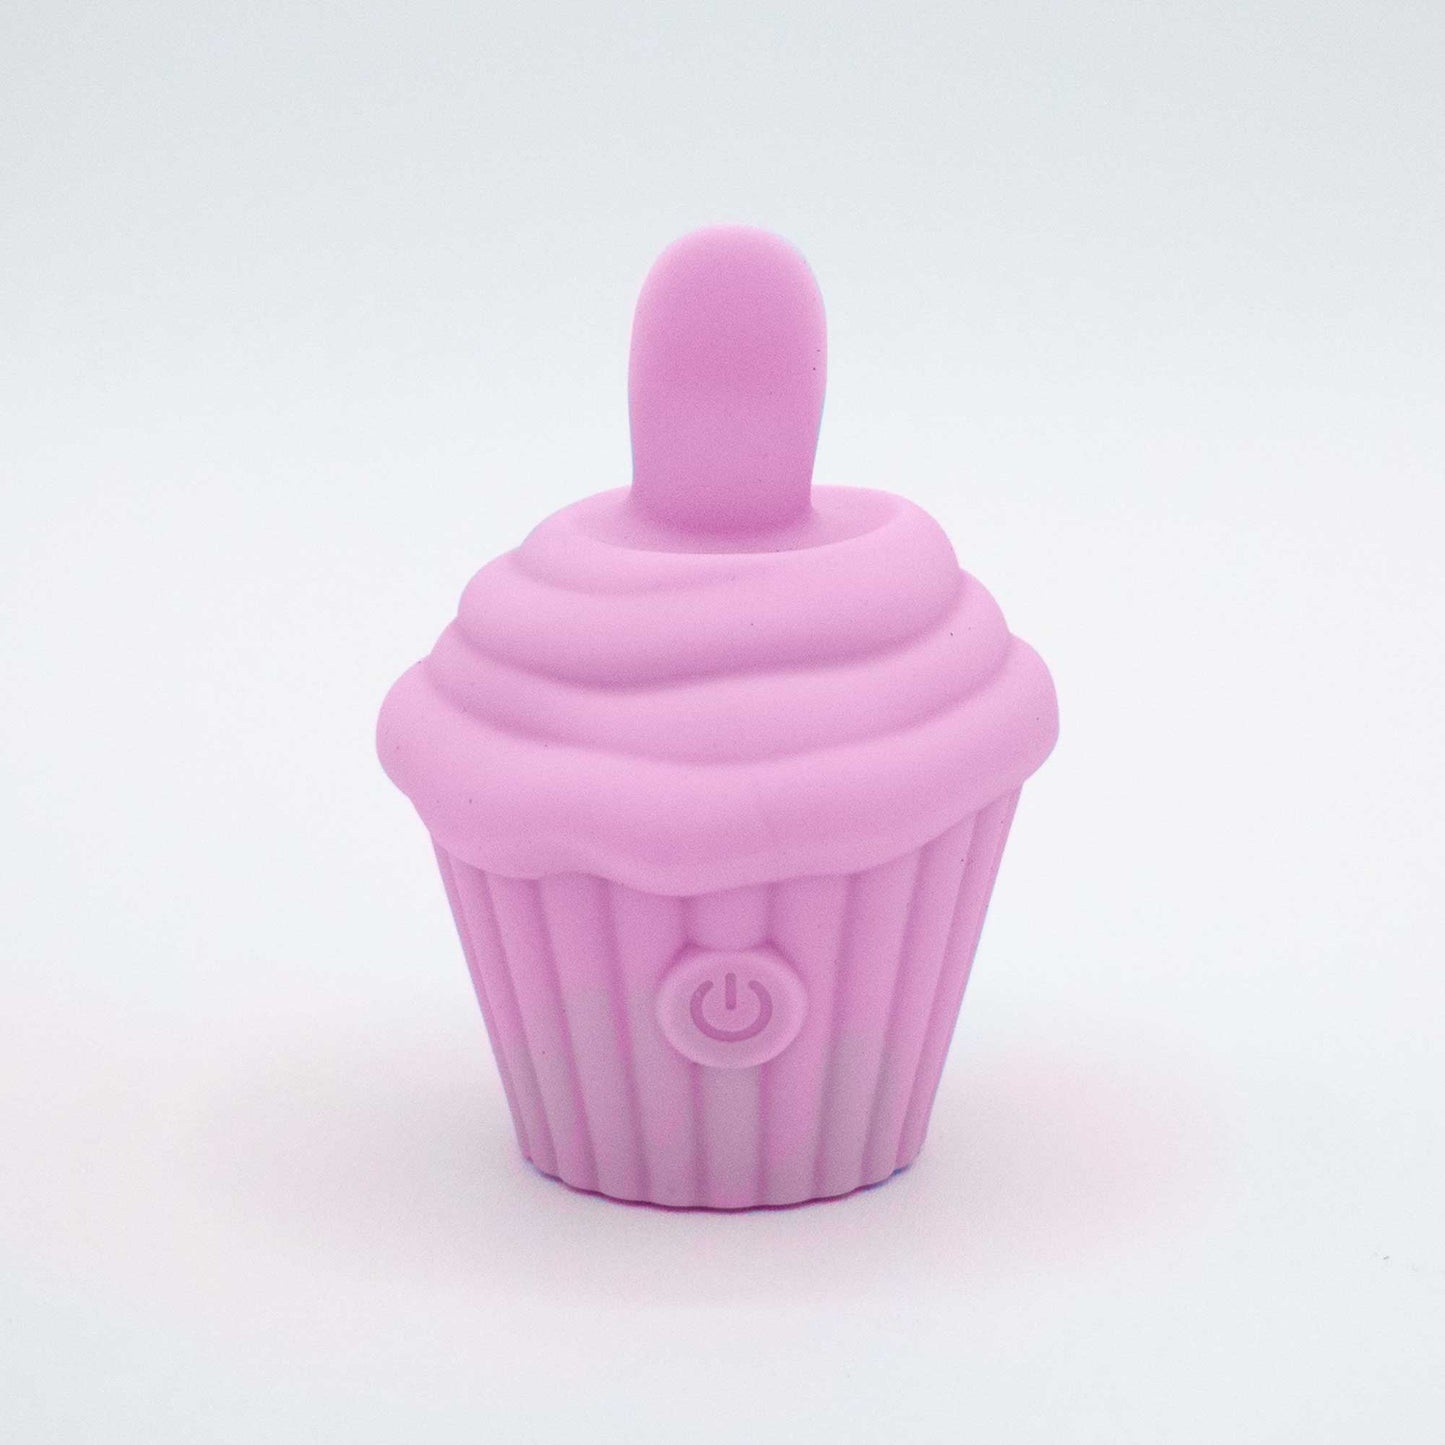 Cake Eater Clit Flicker Stimulator - Pink